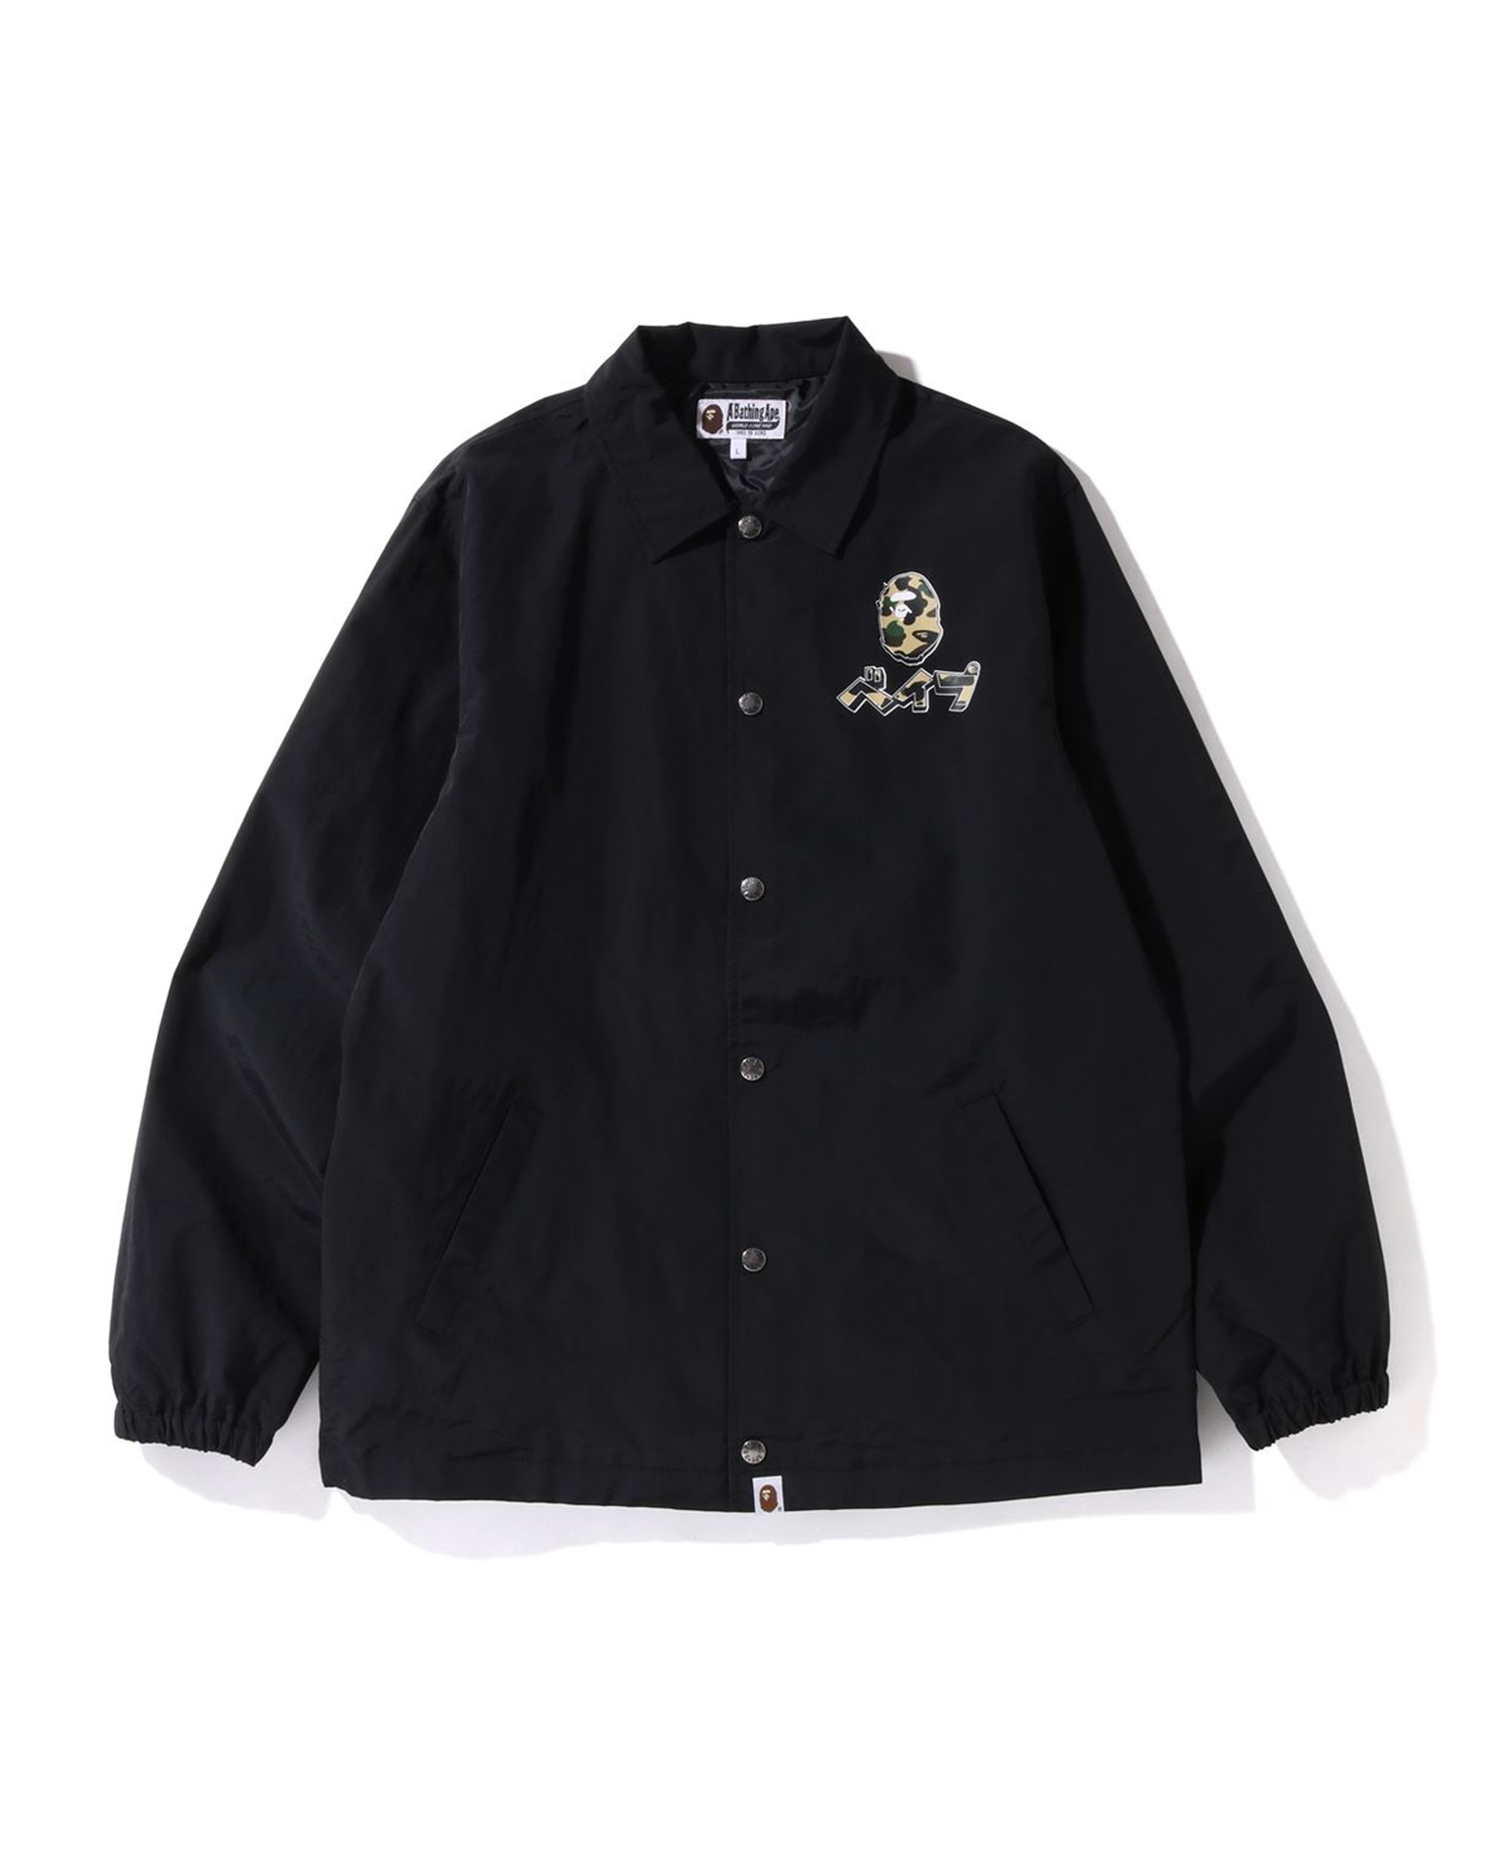 Shop Harajuku Coach Jacket Online | BAPE